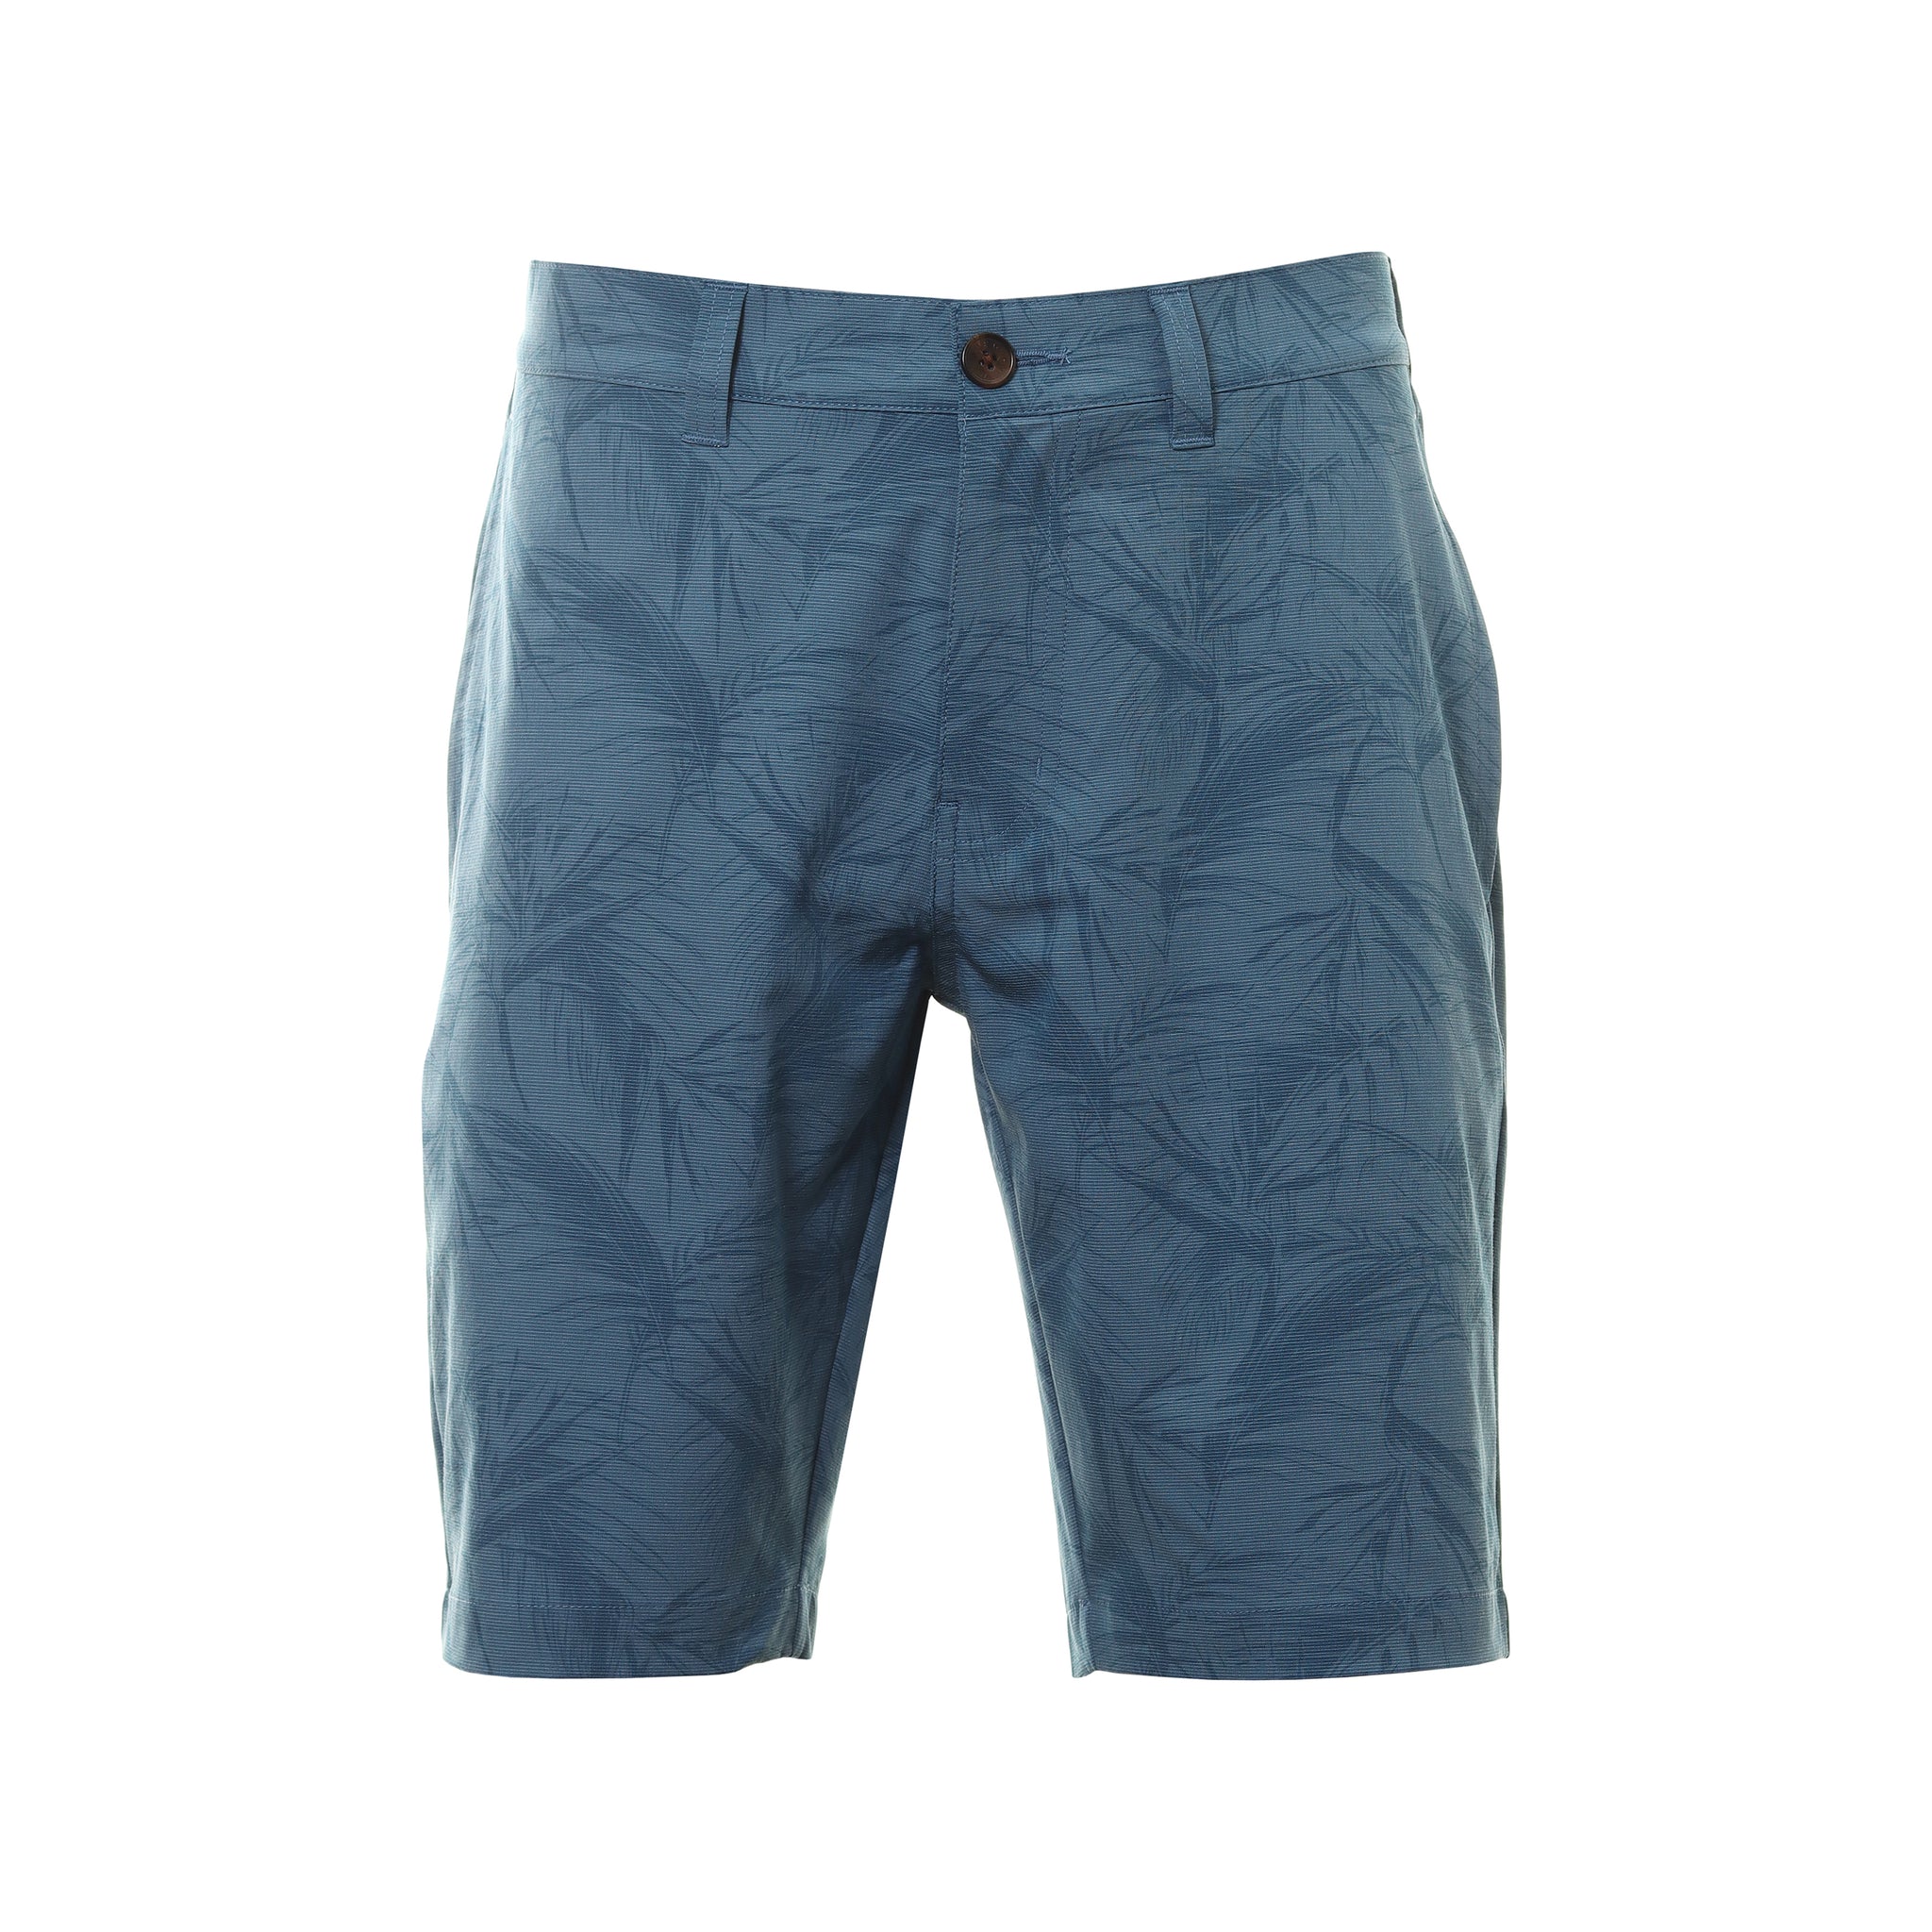 travismathew-jungle-oasis-shorts-1my302-heather-mid-blue